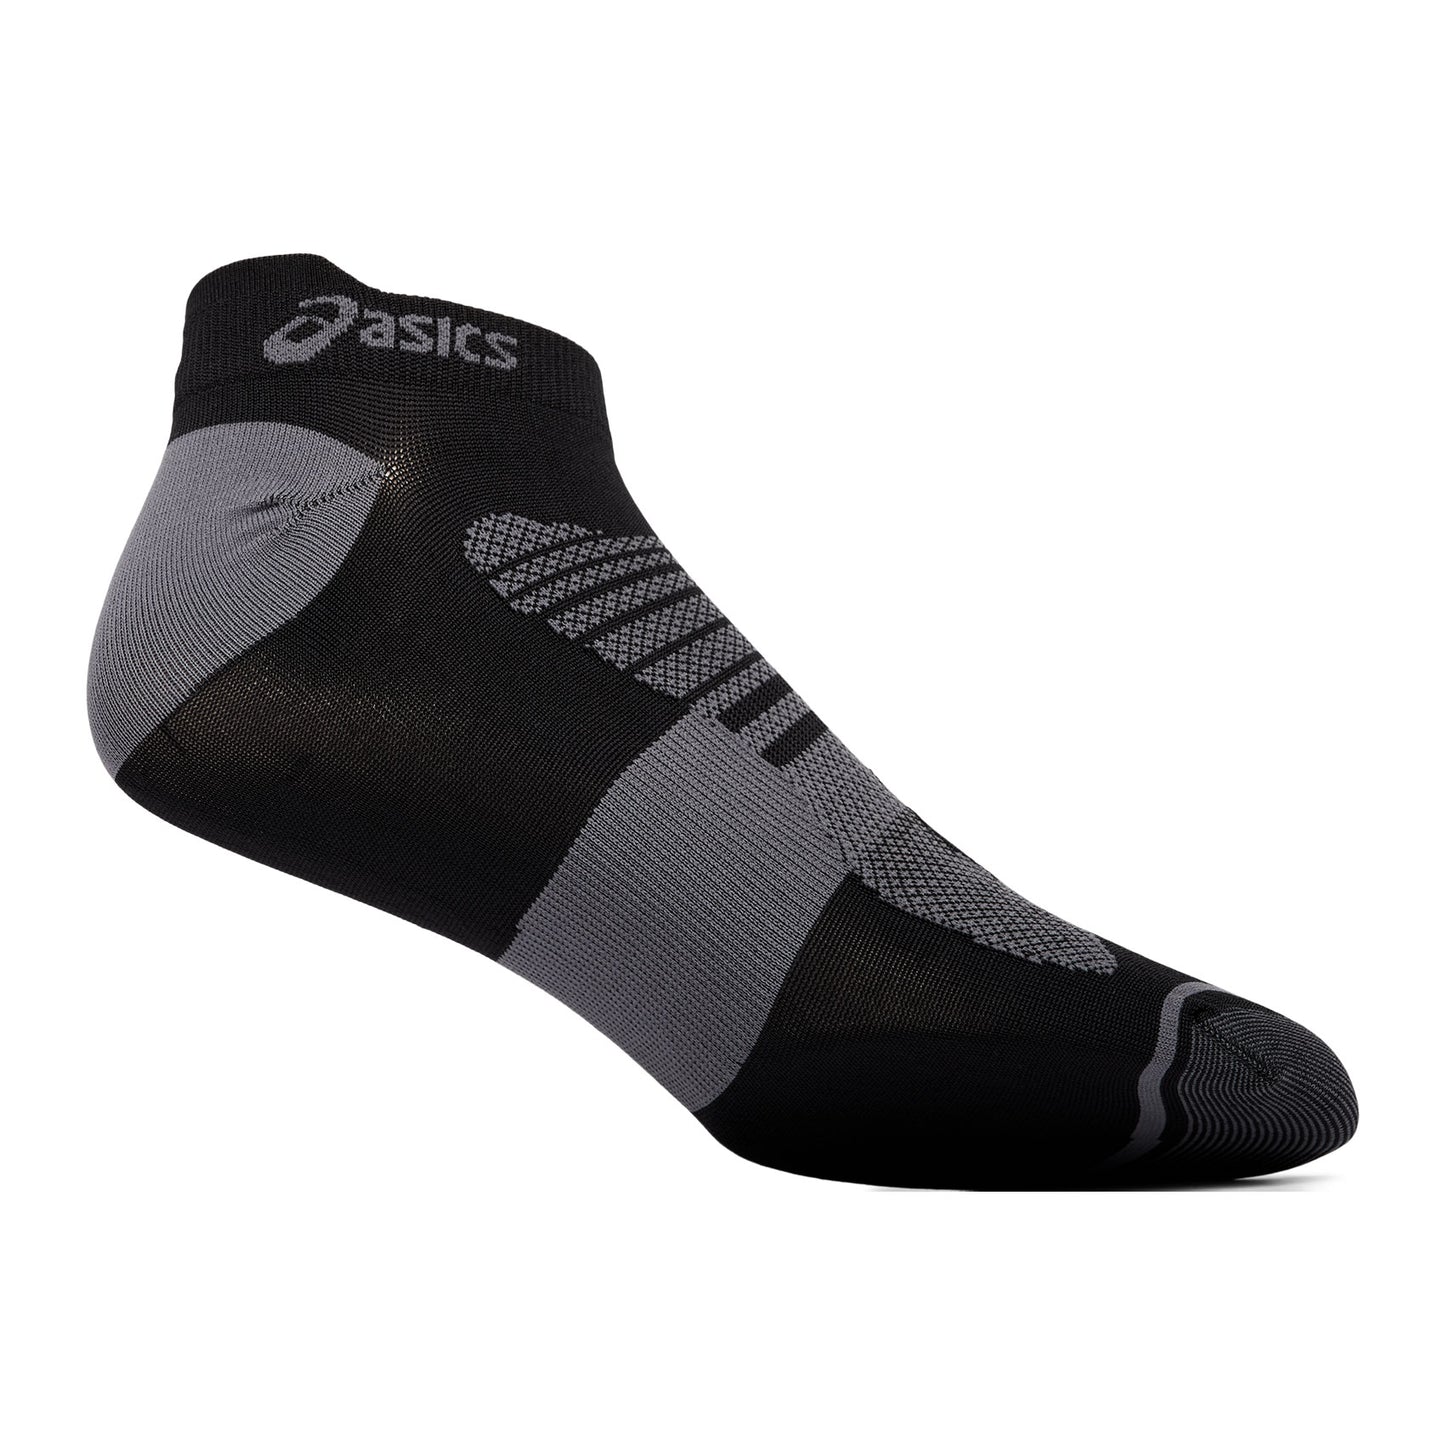 Men's Quick Lyte Plus Socks - Performance Black/Carrier Grey- 3-pack